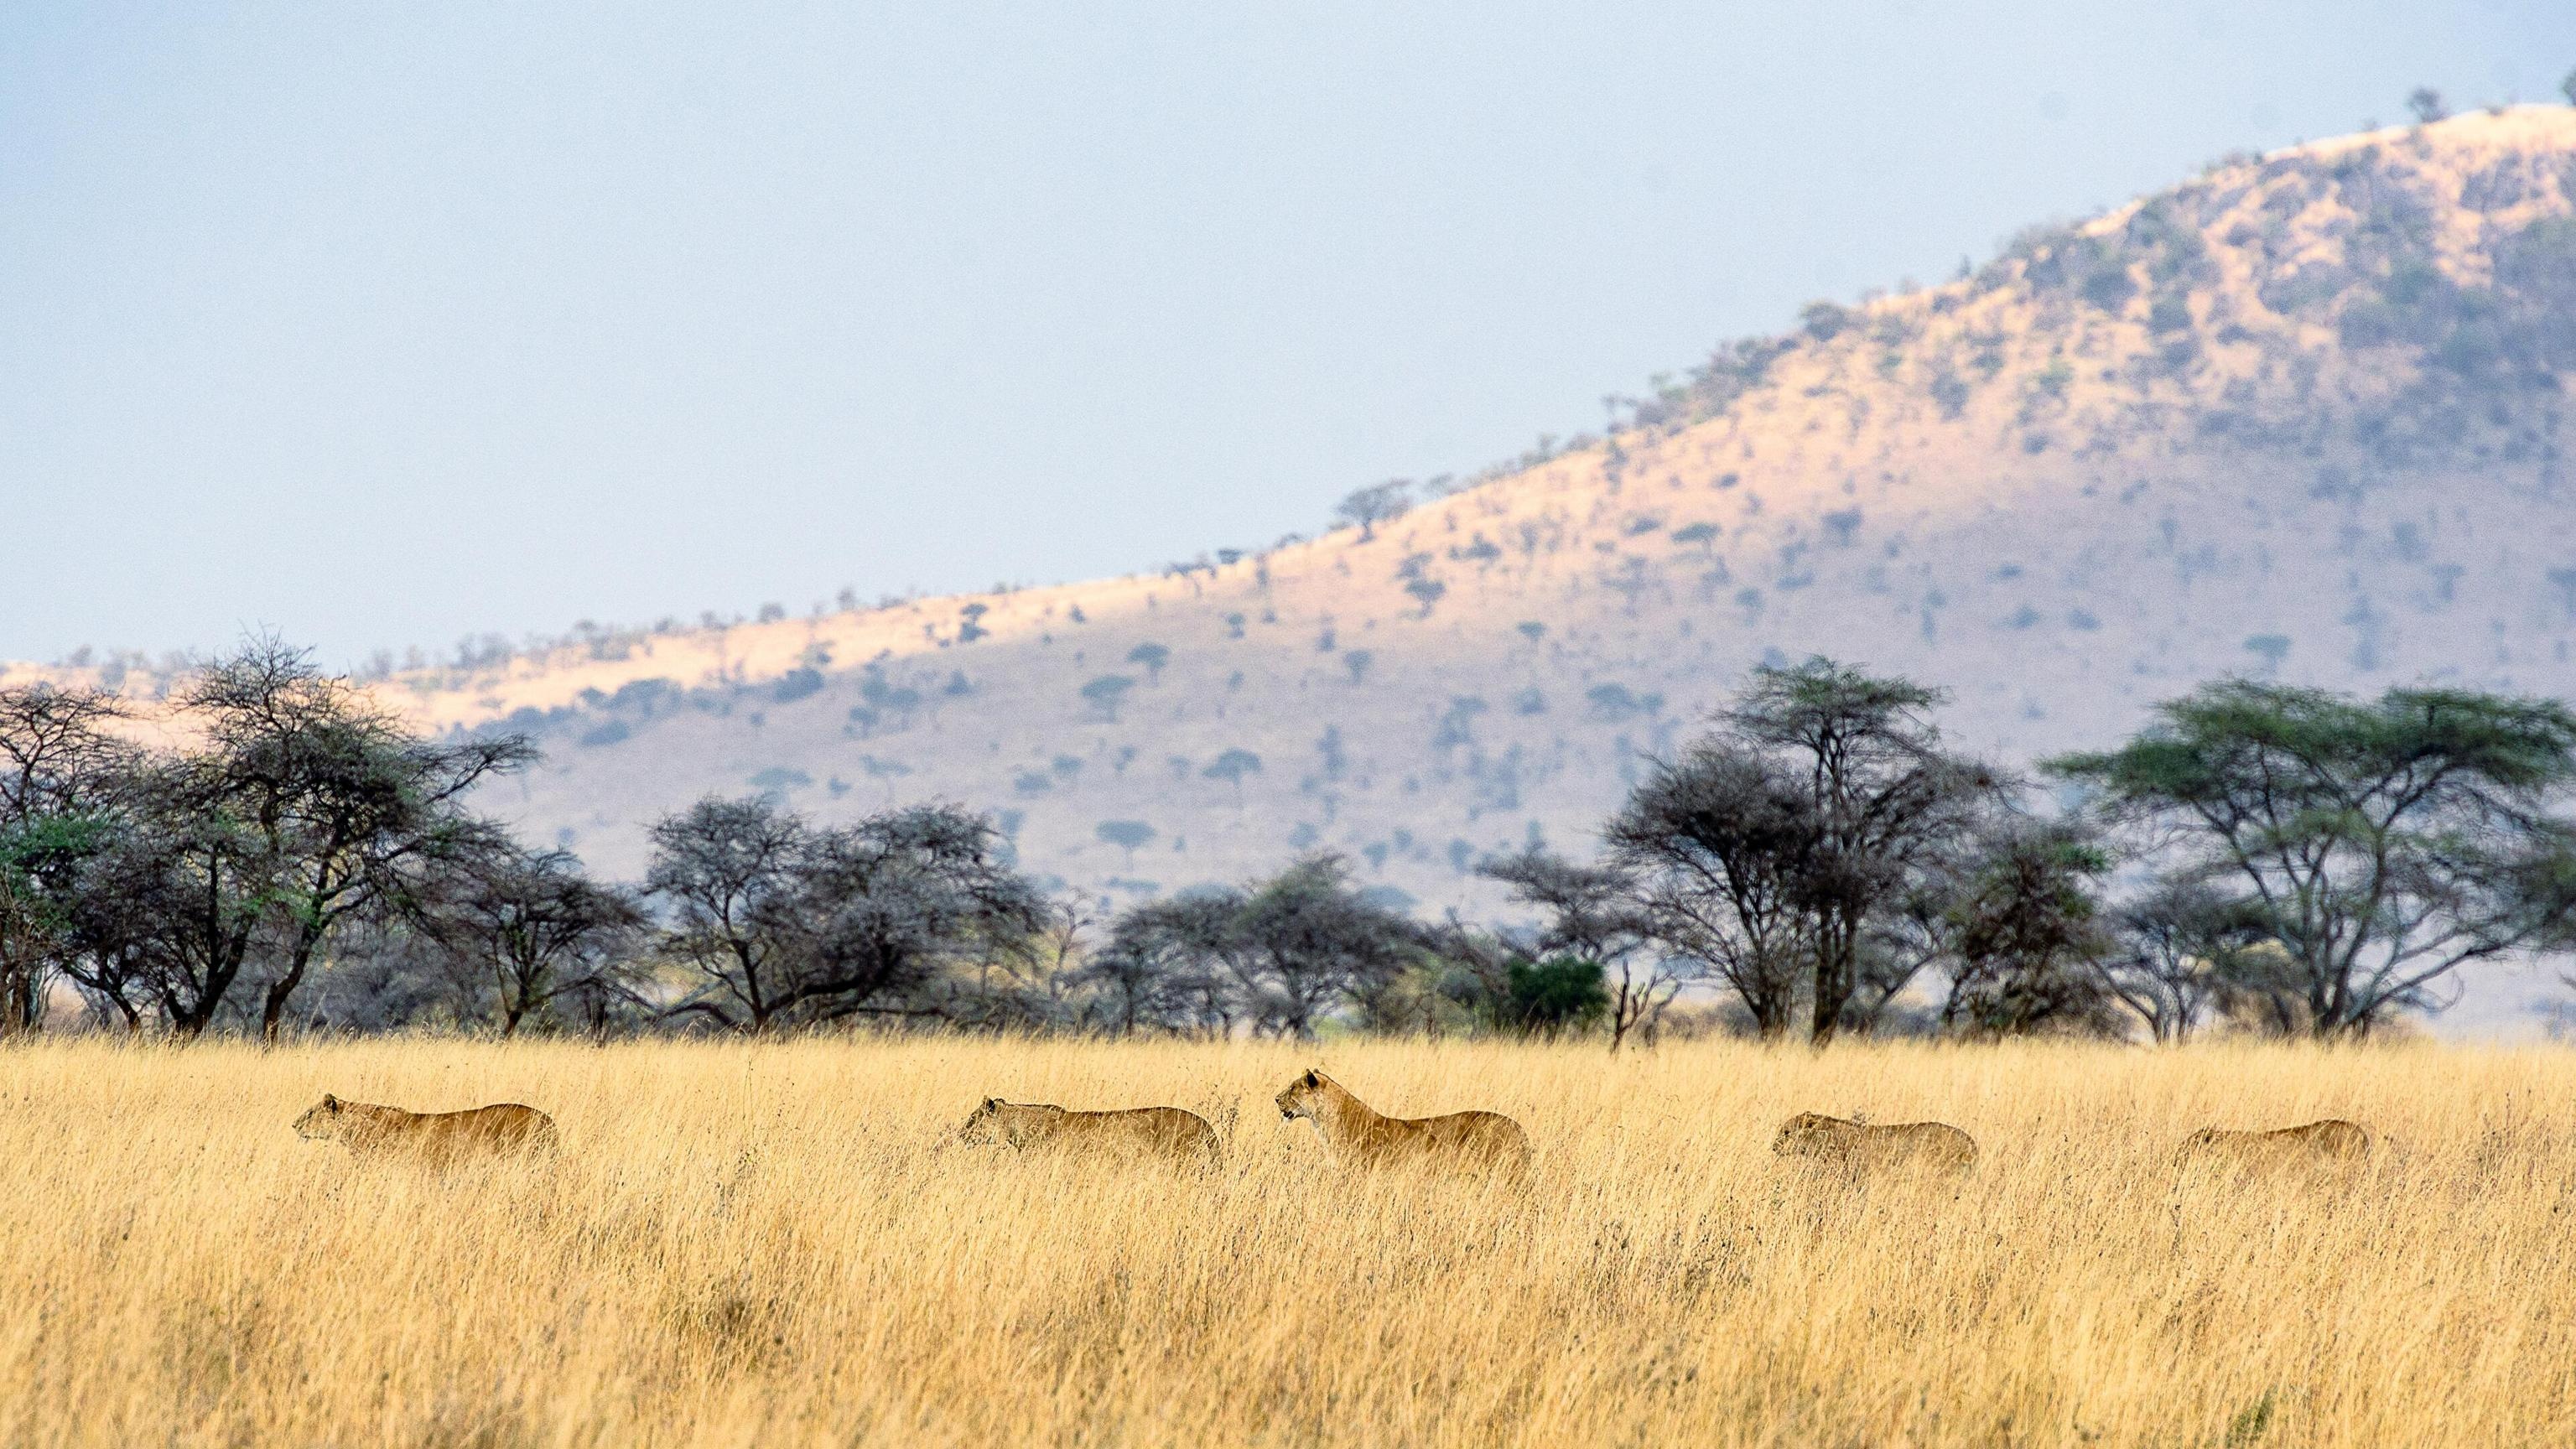 Serengeti pride, Lion waiting patiently, Tanzania's wildlife, Majestic sight, 3080x1730 HD Desktop